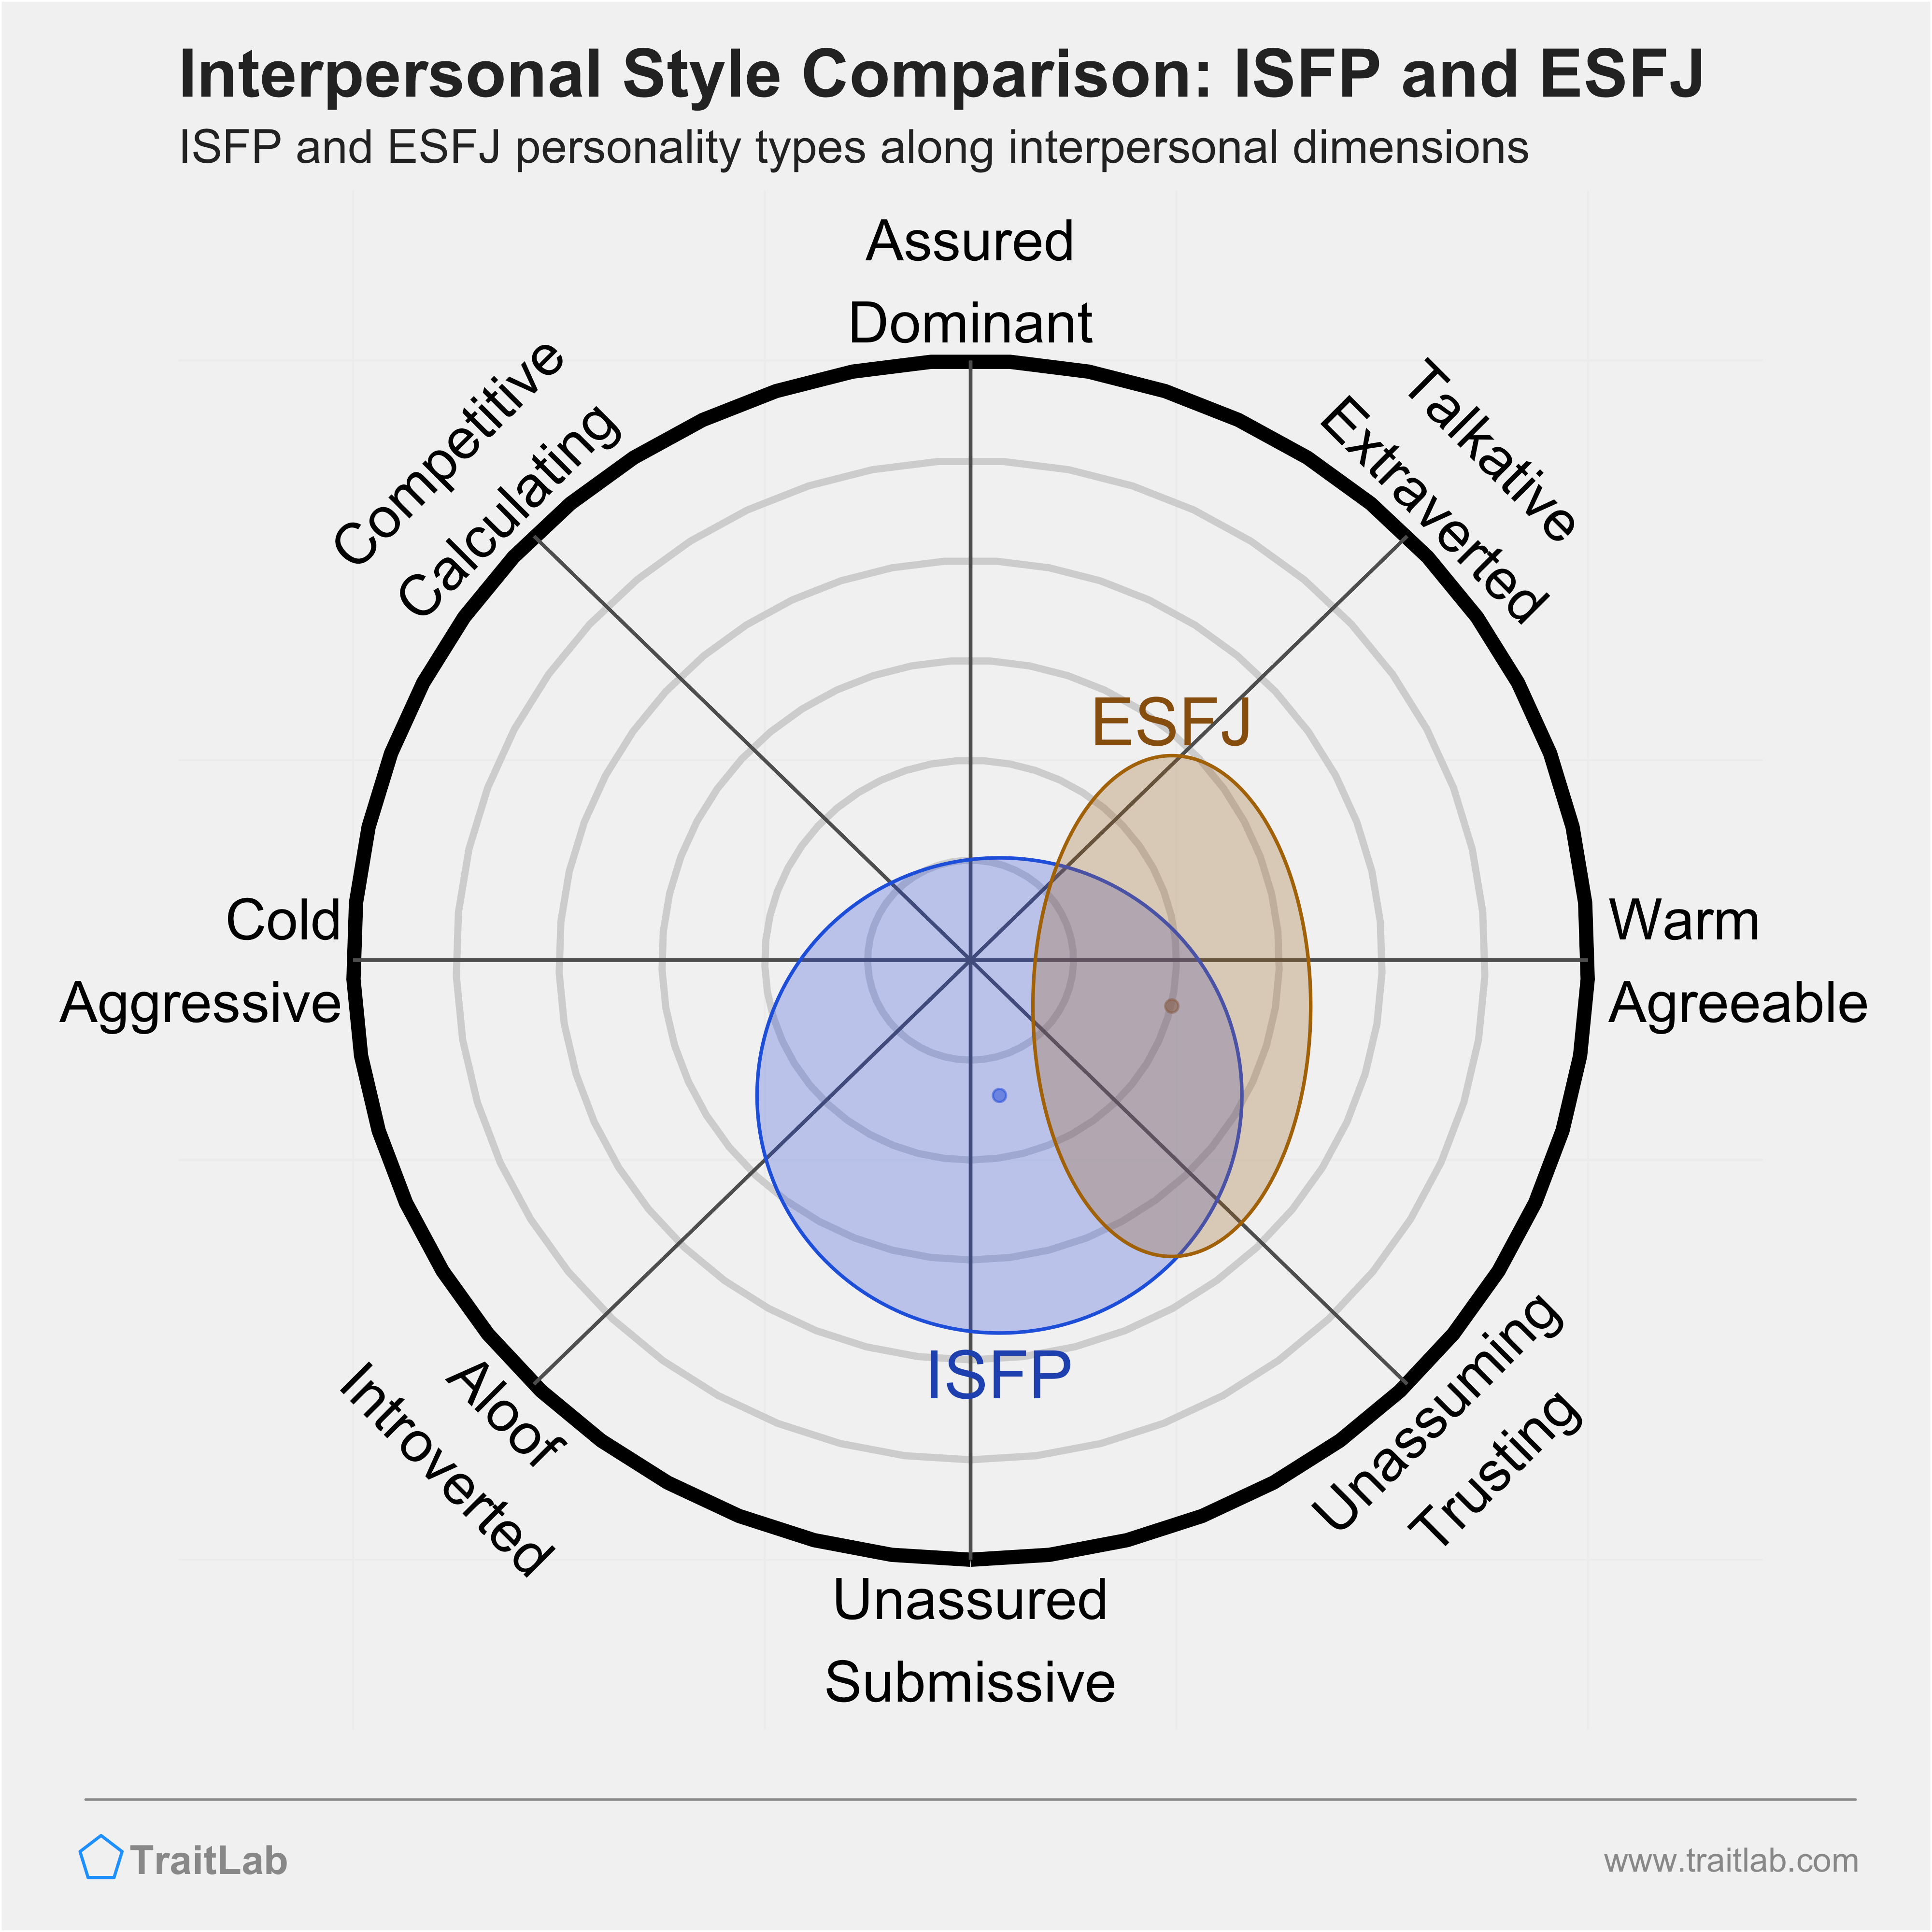 ISFP and ESFJ comparison across interpersonal dimensions